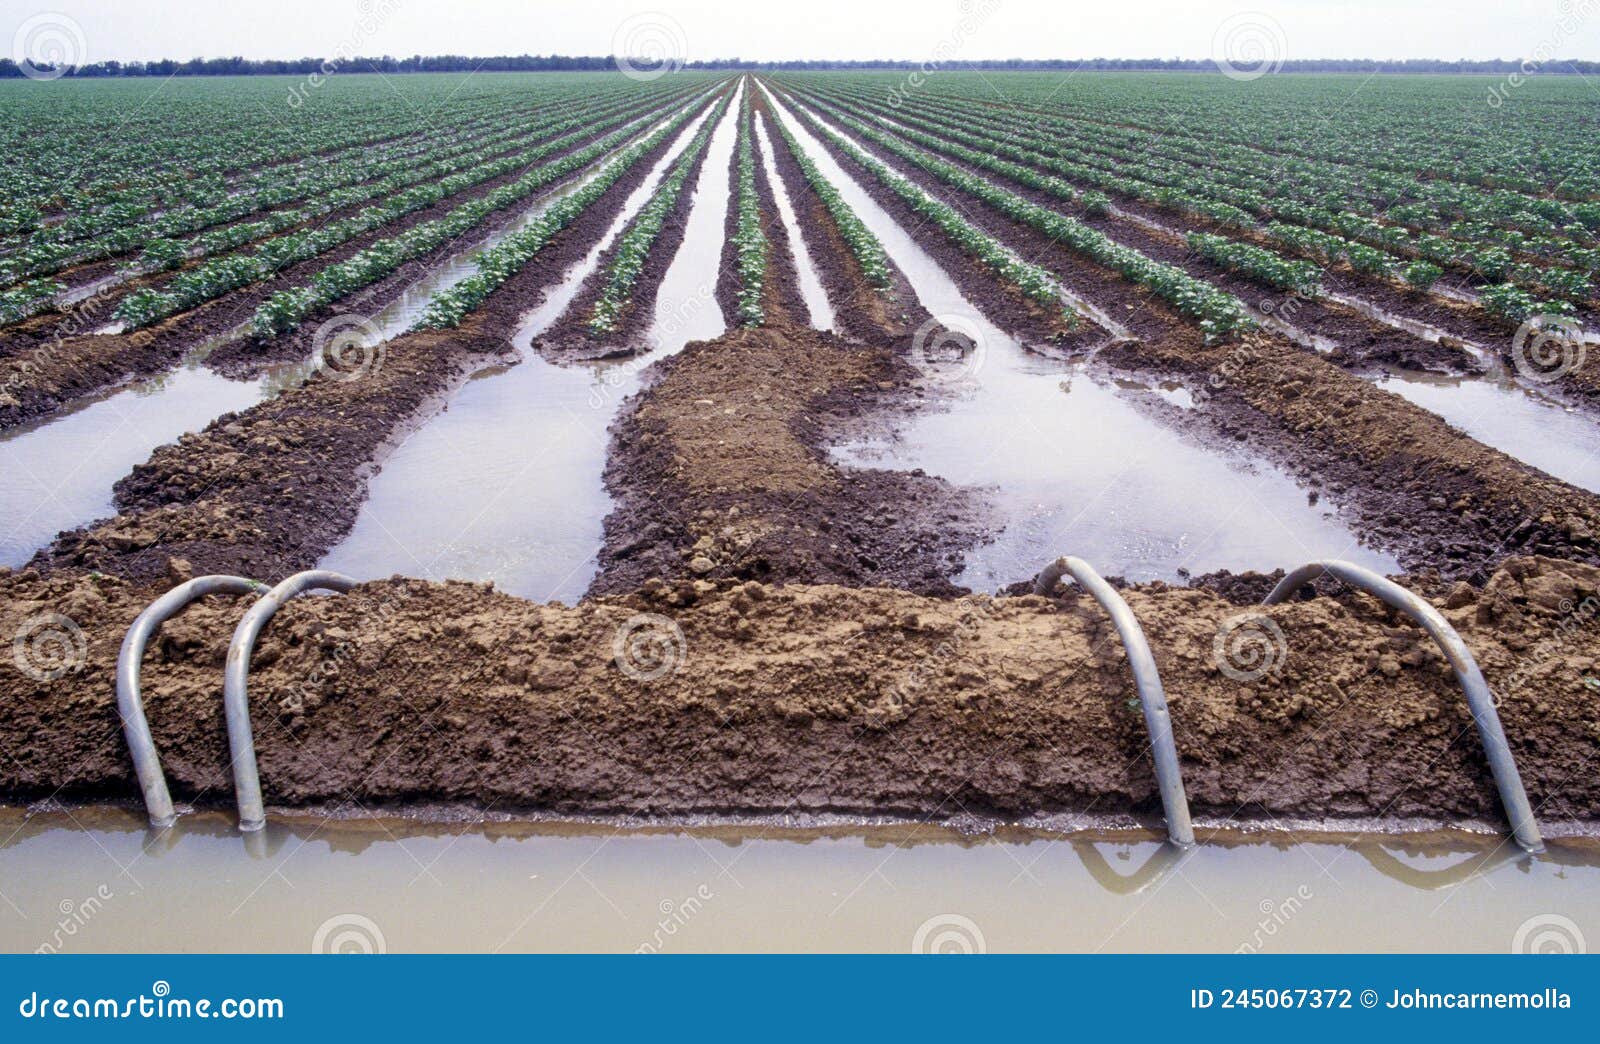 crops under irrigation at kununurra.